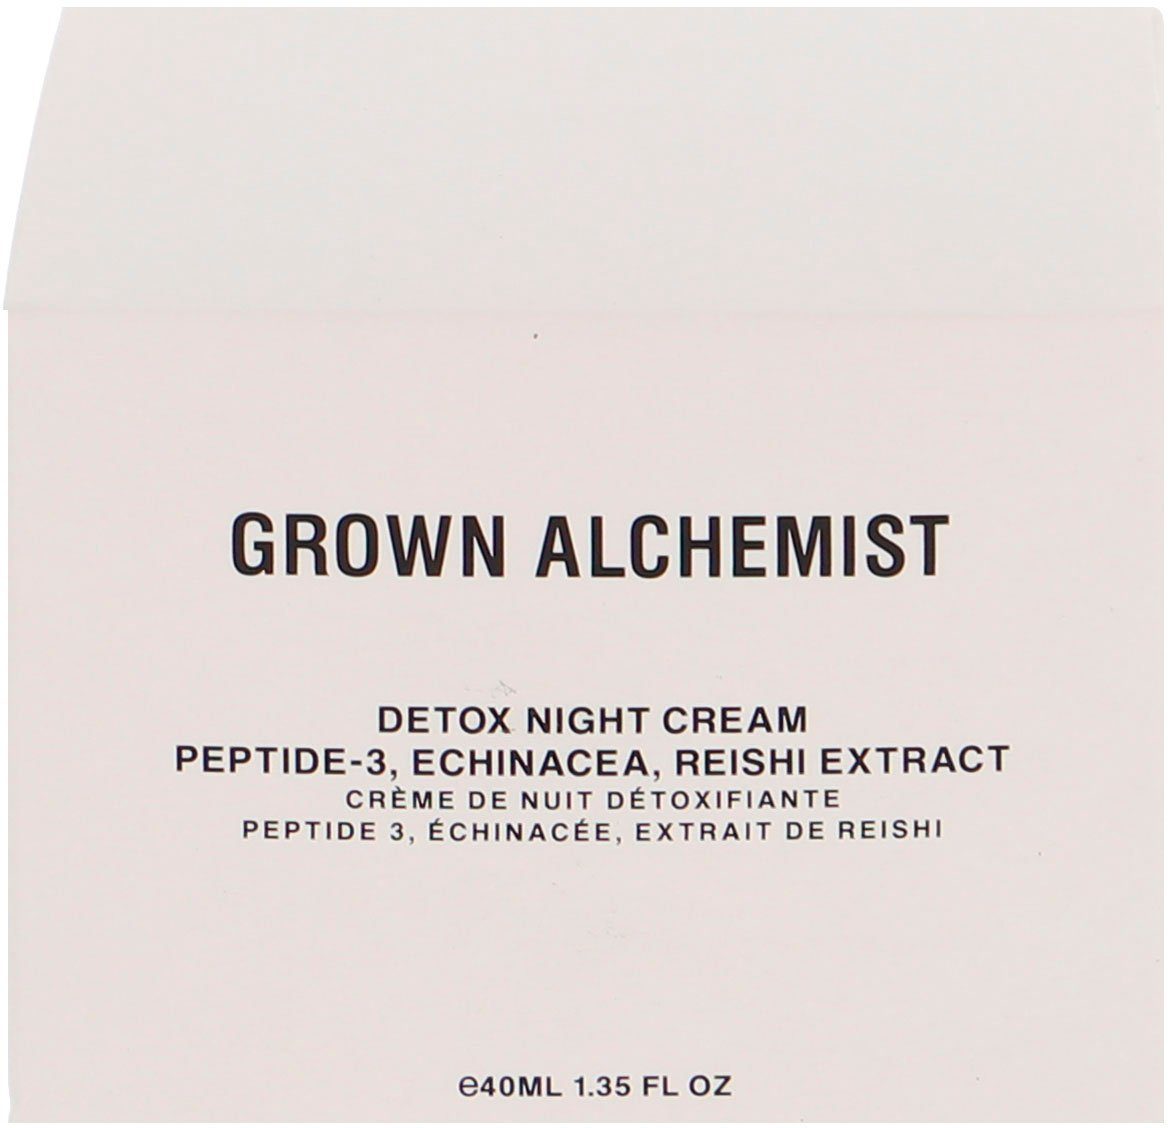 ALCHEMIST Extract Peptide-3, Detox Cream, Echinacea, Night Reishi Nachtcreme GROWN